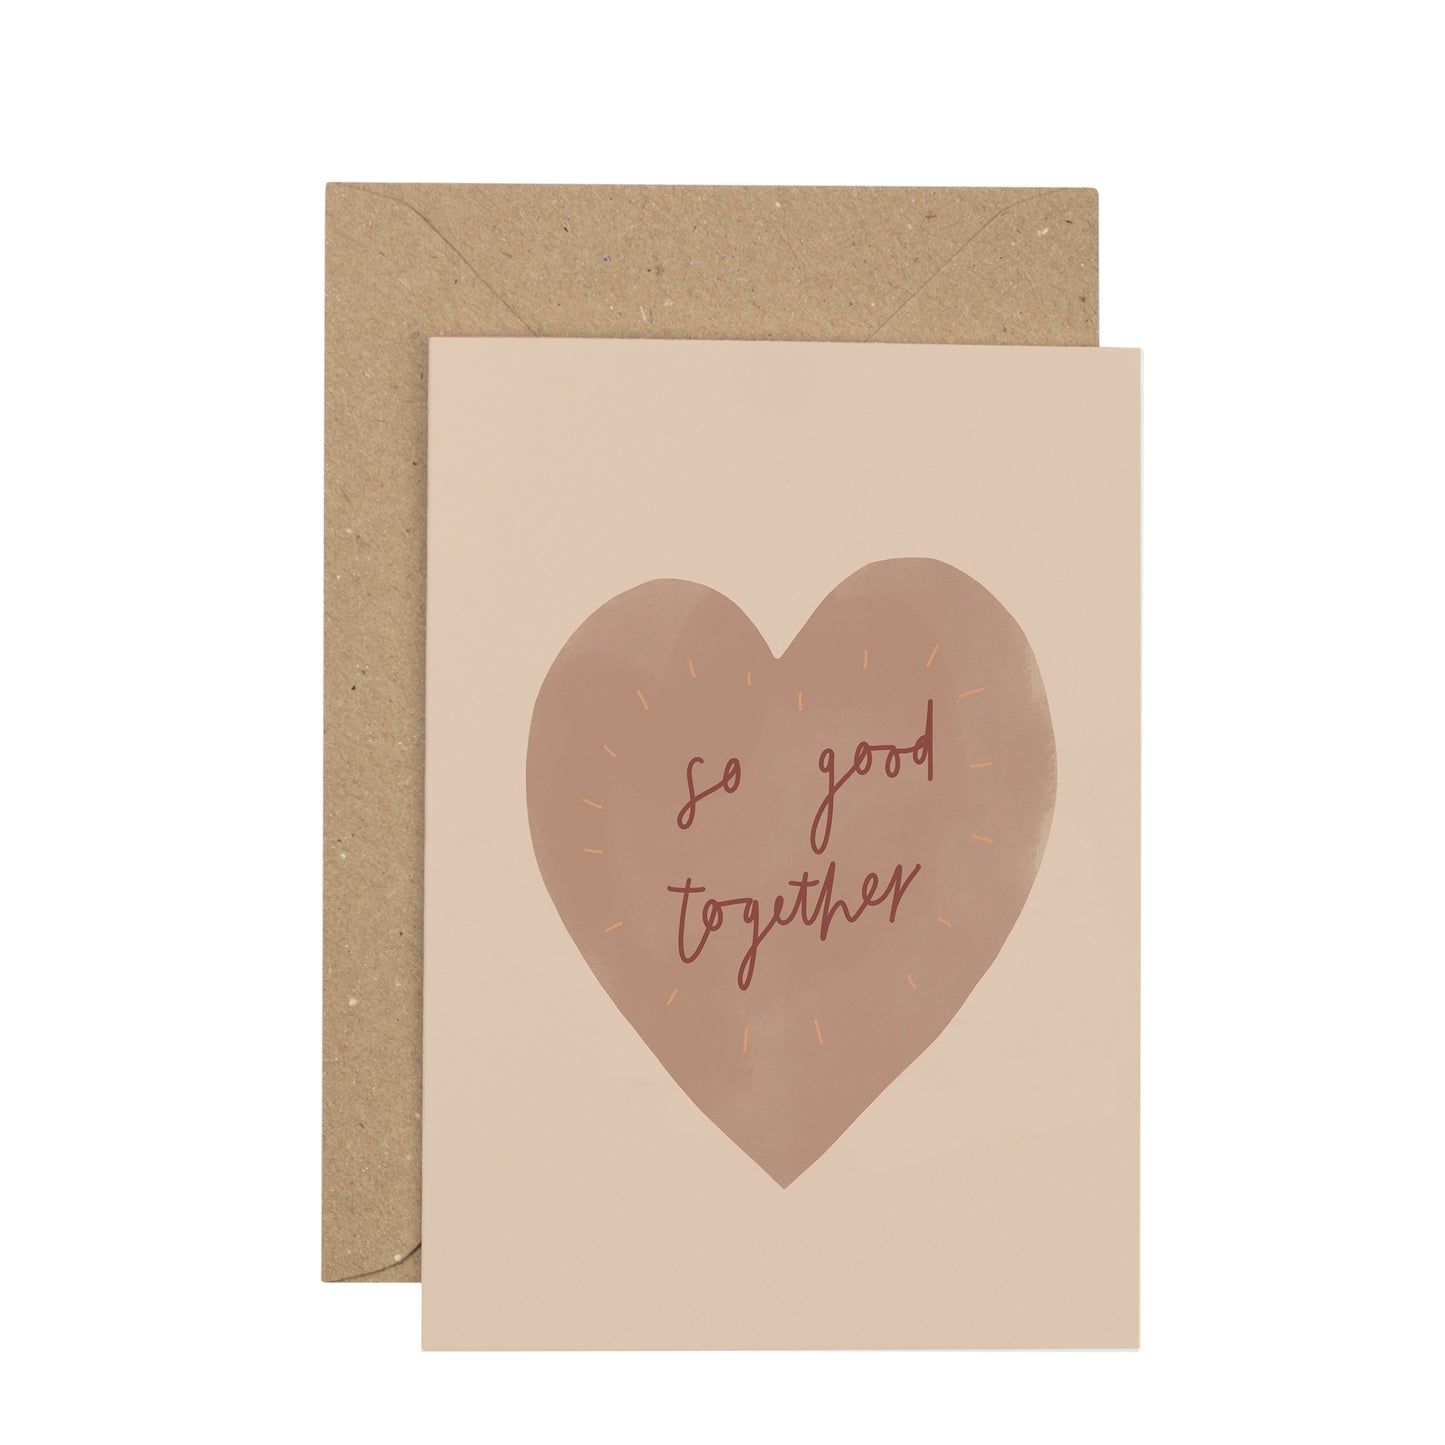 so-good-together-valentines-card